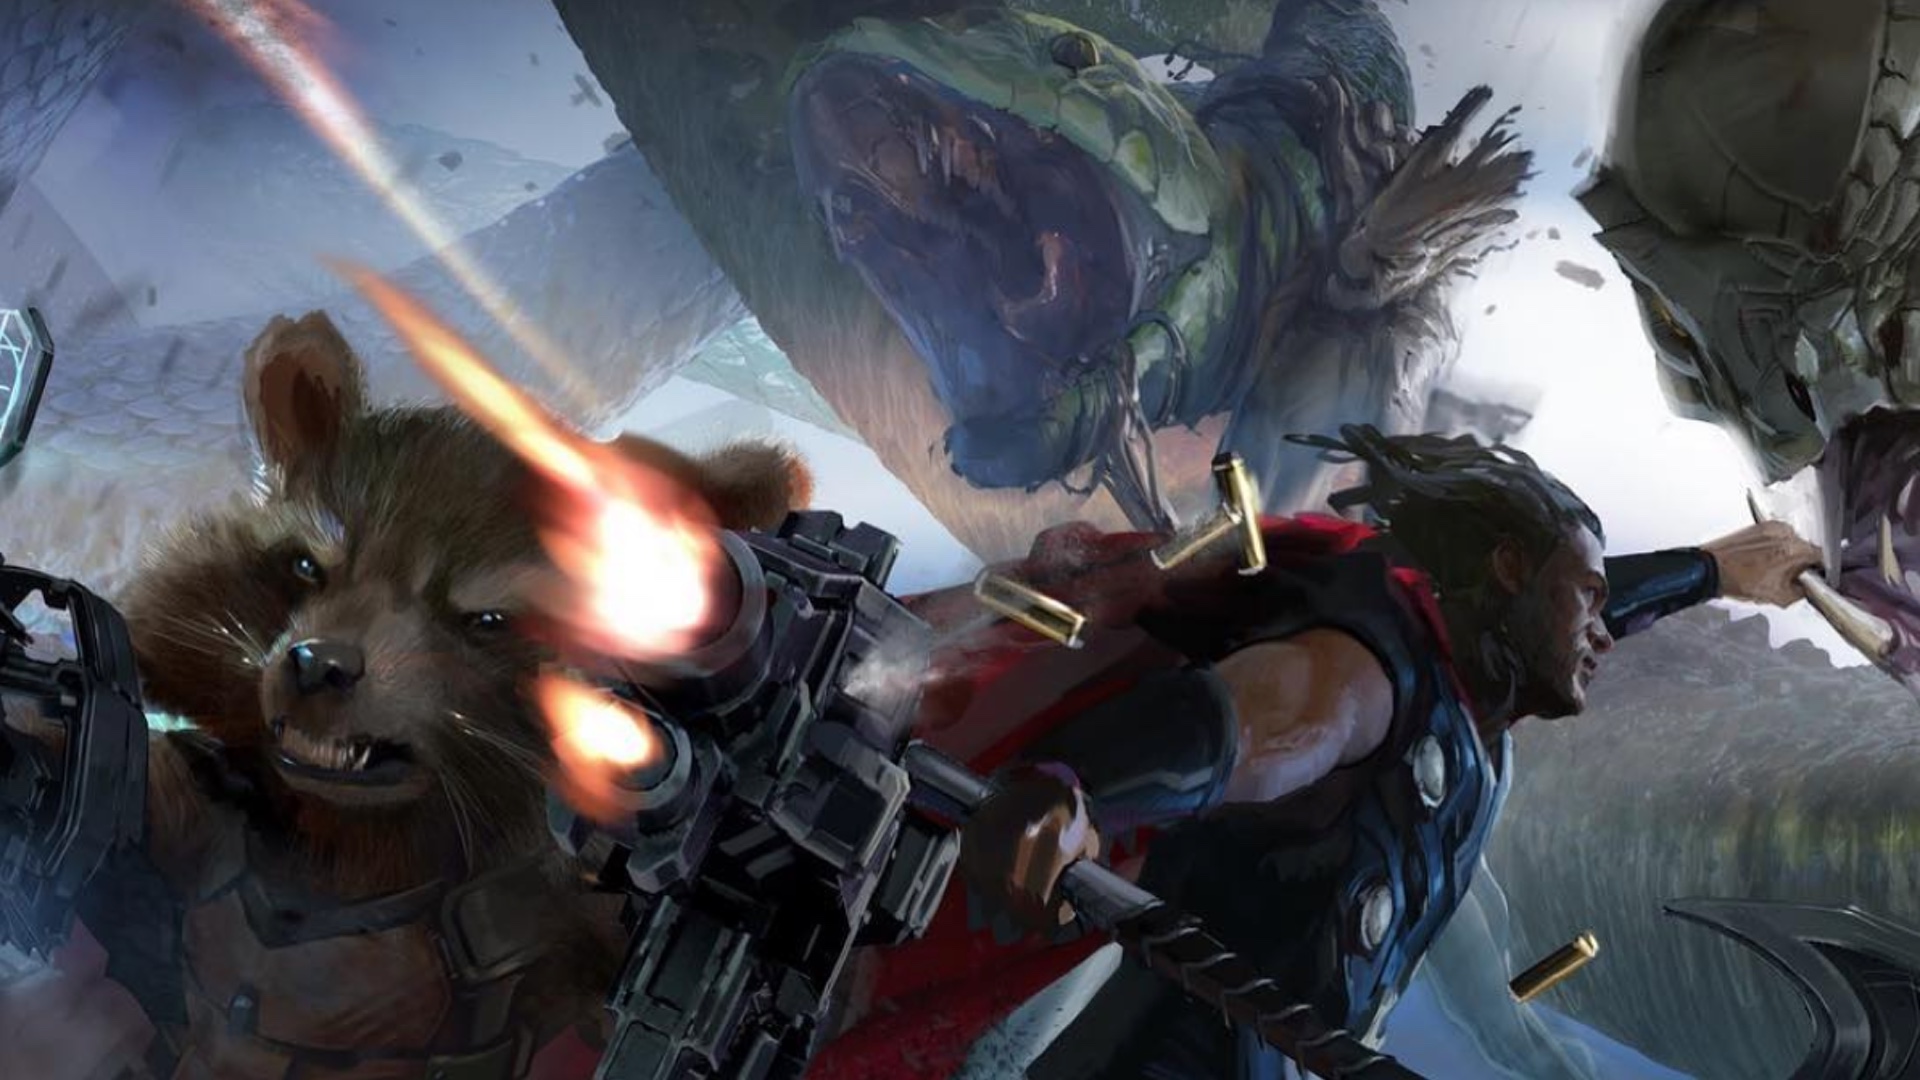 avengers-infinity-war-key-art-shows-thor-and-rocket-battling-giant-serpents-social.jpg